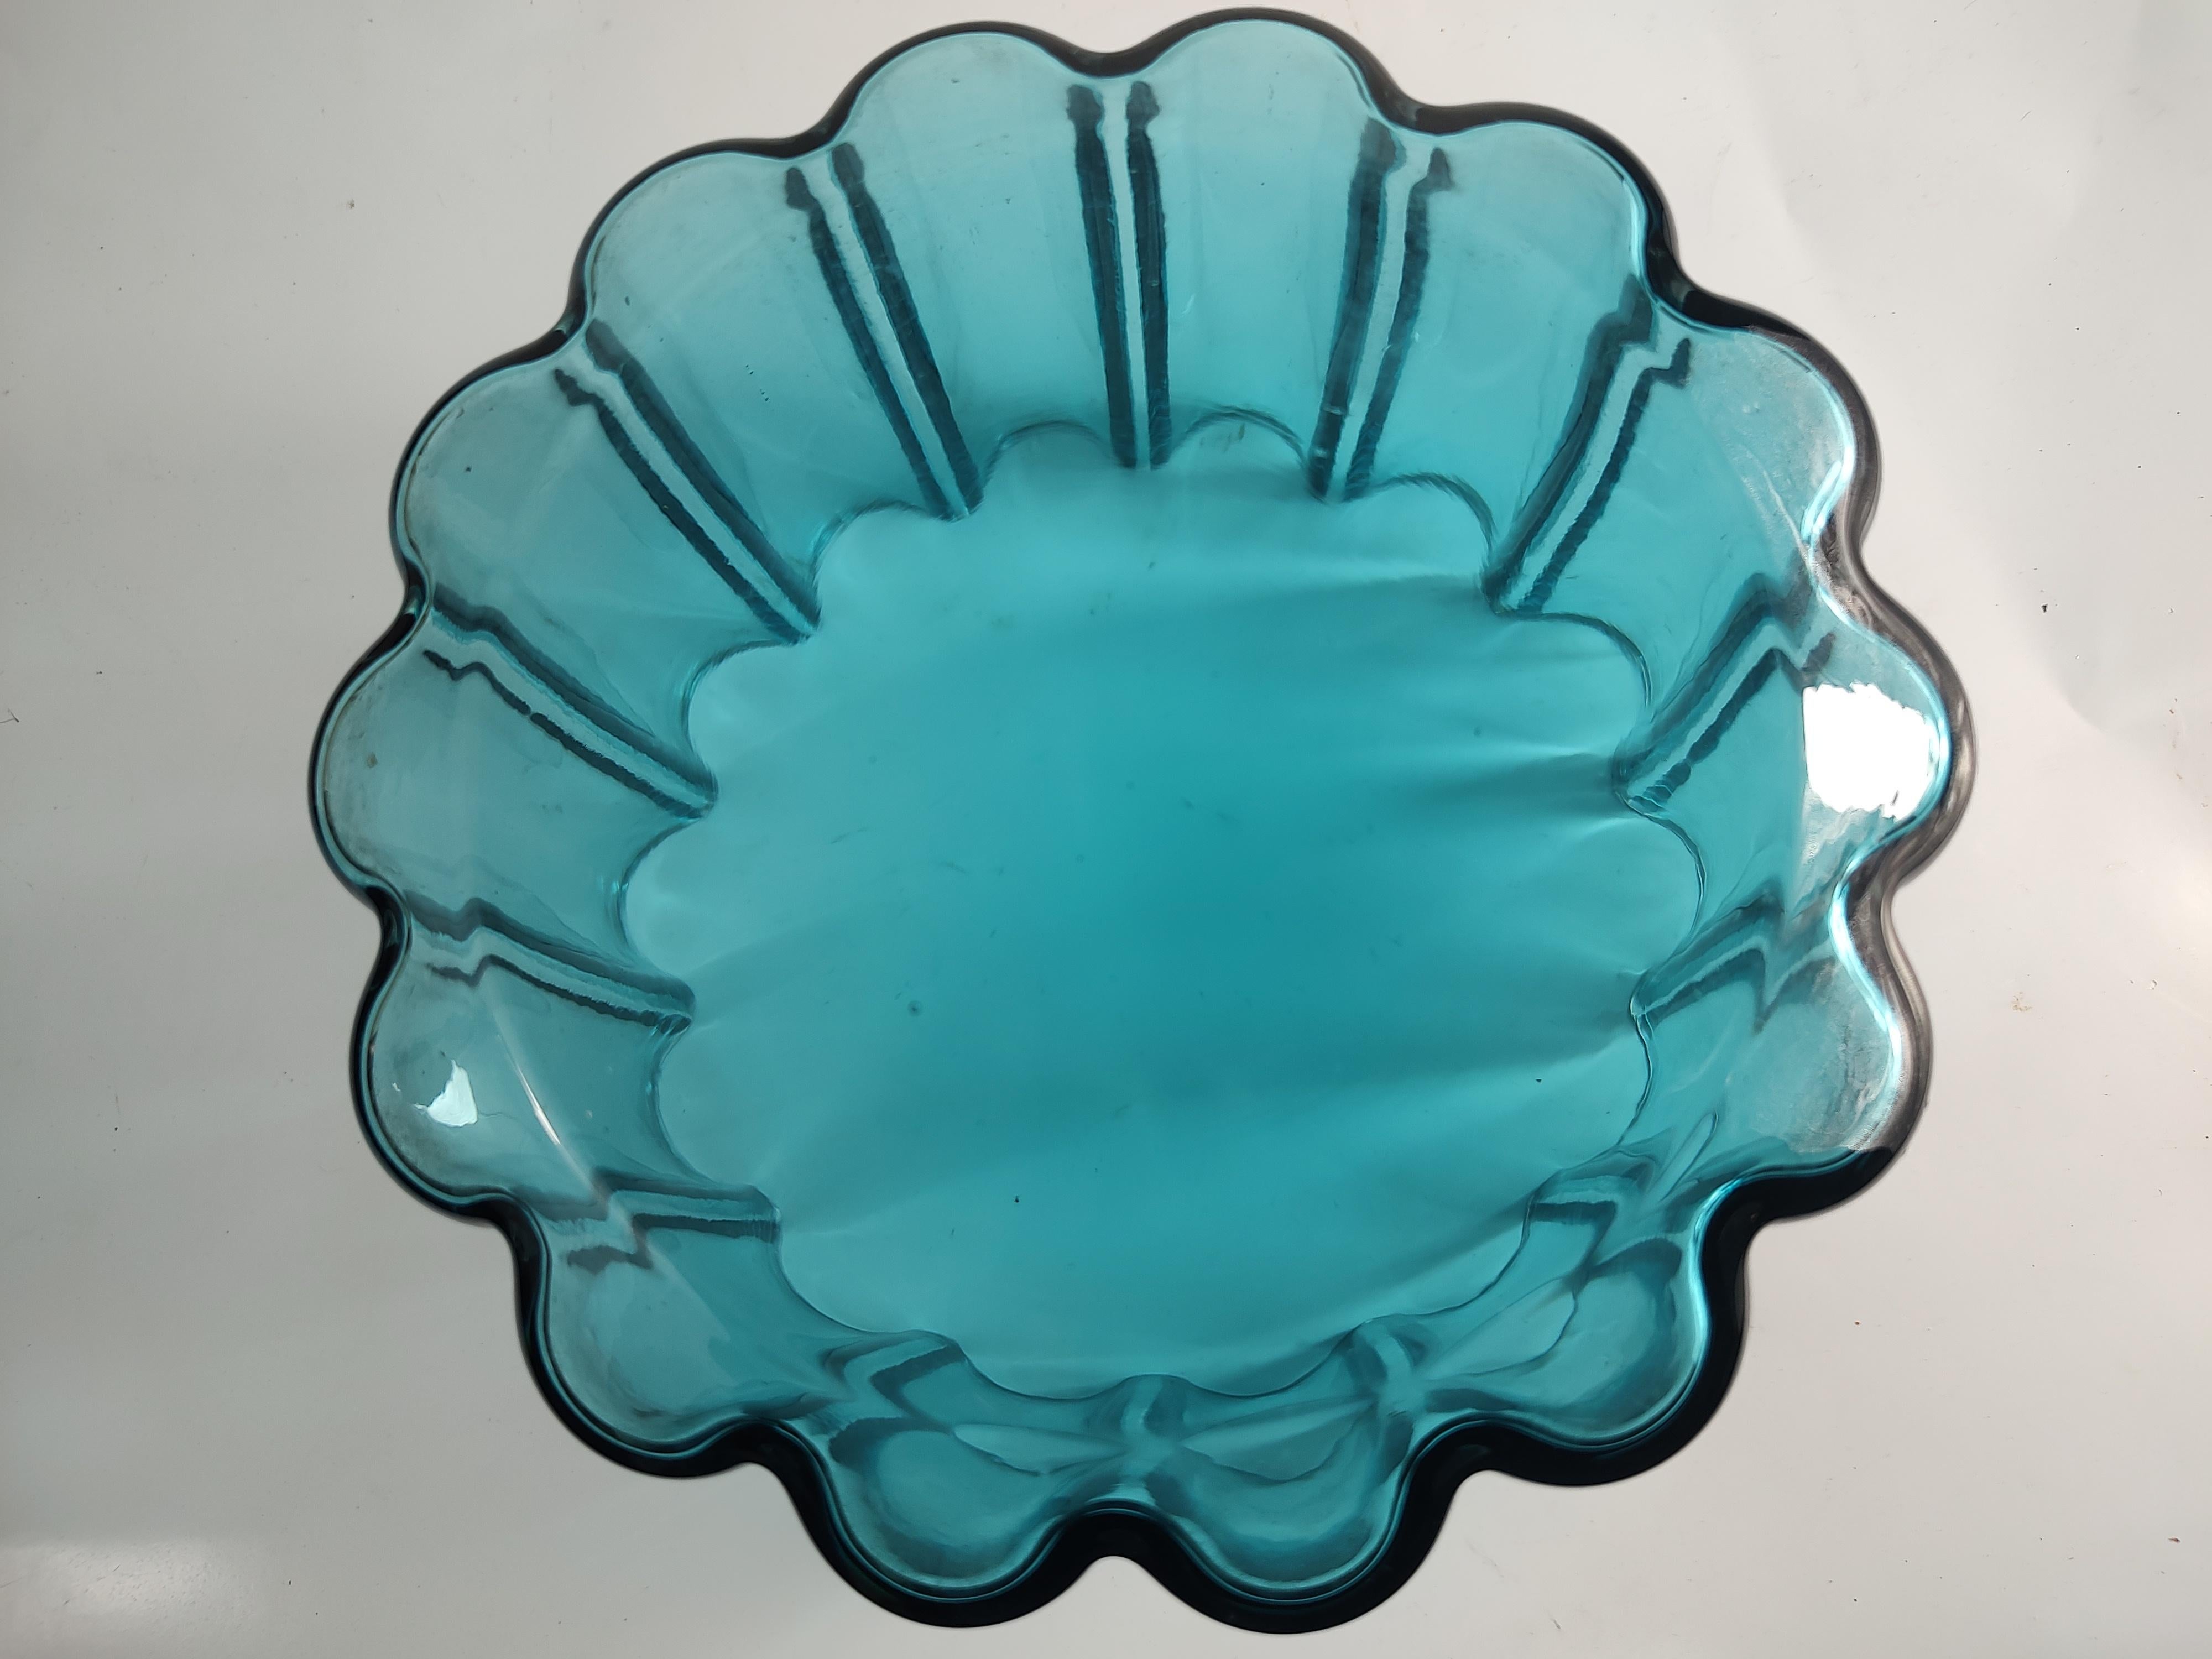 Scandinavian Modern Dansk Design Scalloped Blue Art Glass Vase Bowl by Jens Quistgaard For Sale